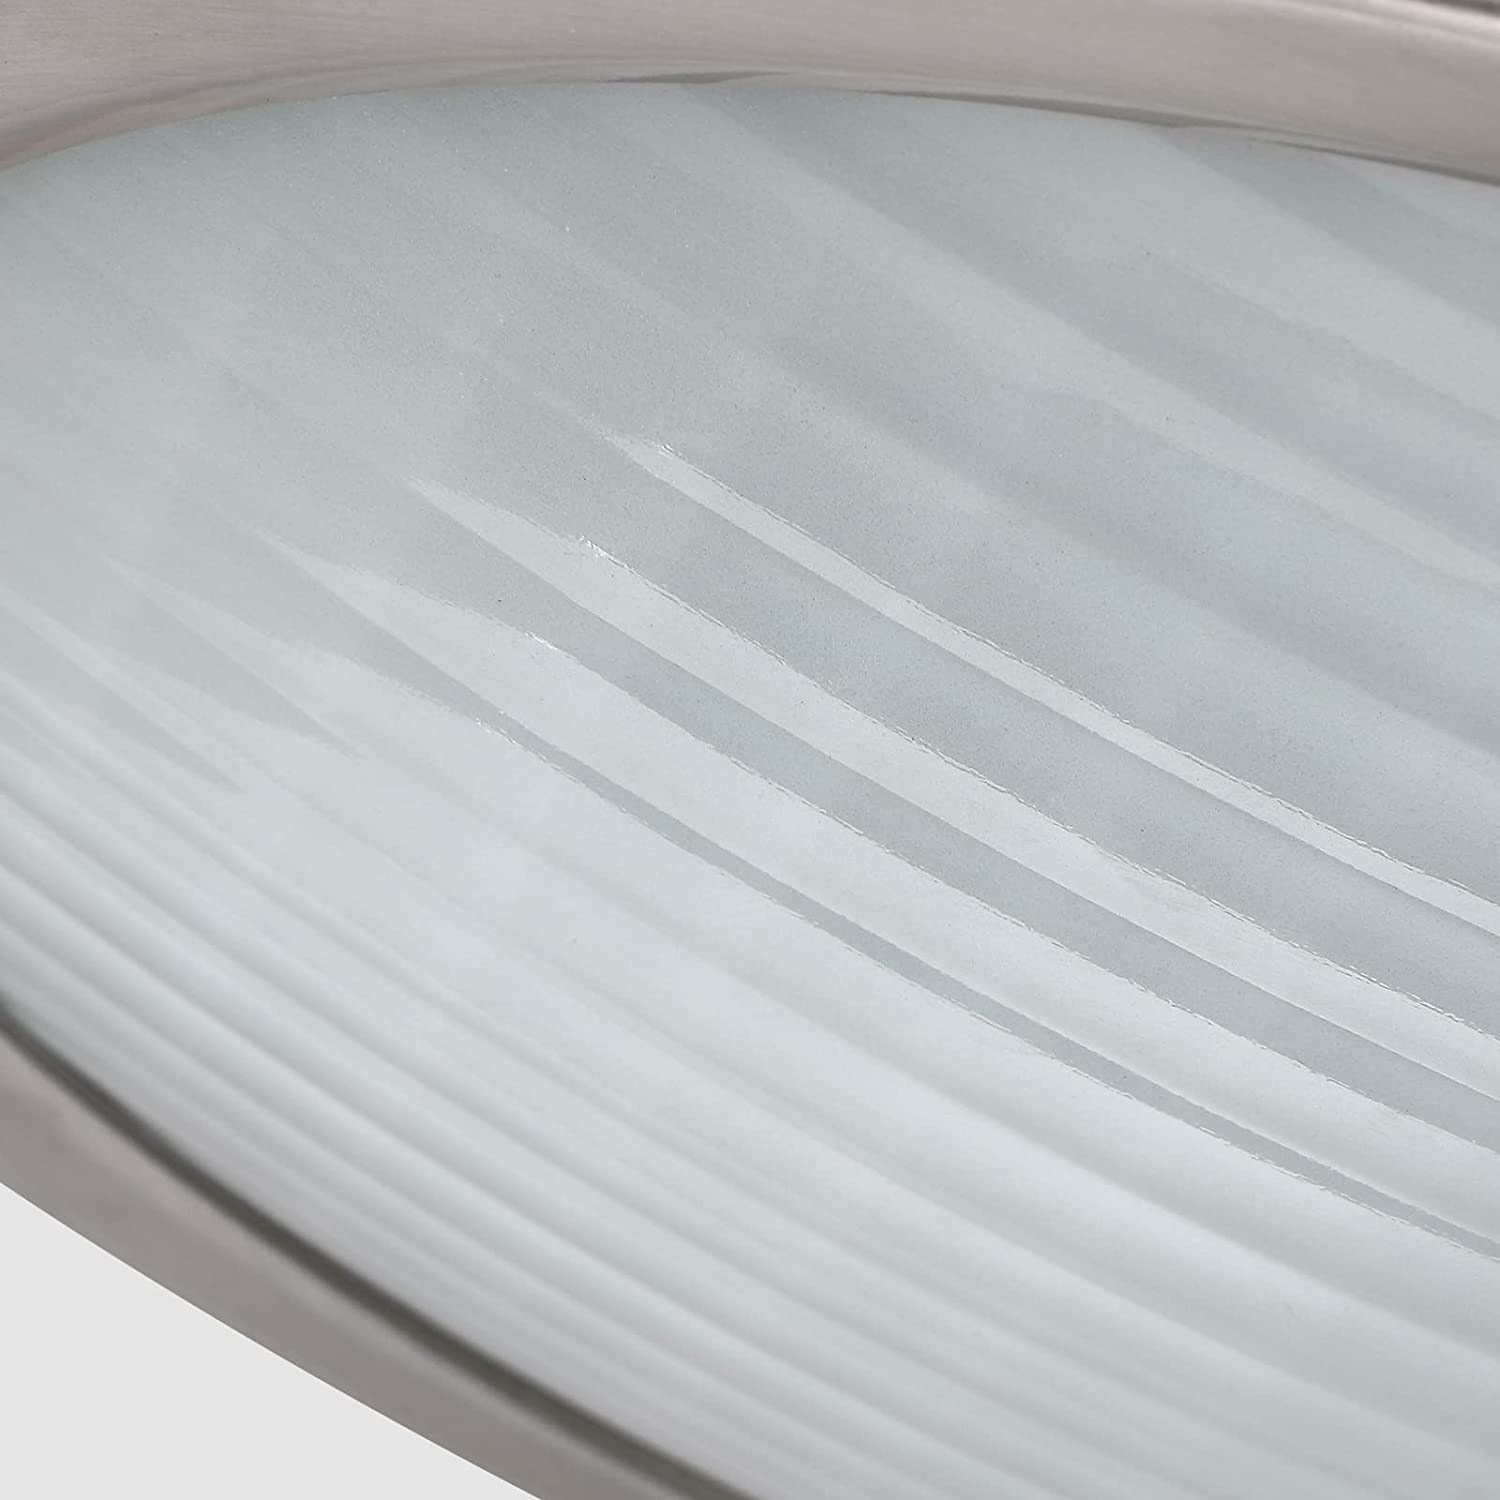 14 Inch LED Flush Mount Ceiling Light round flat panel LED ceiling lamp with nickel finish